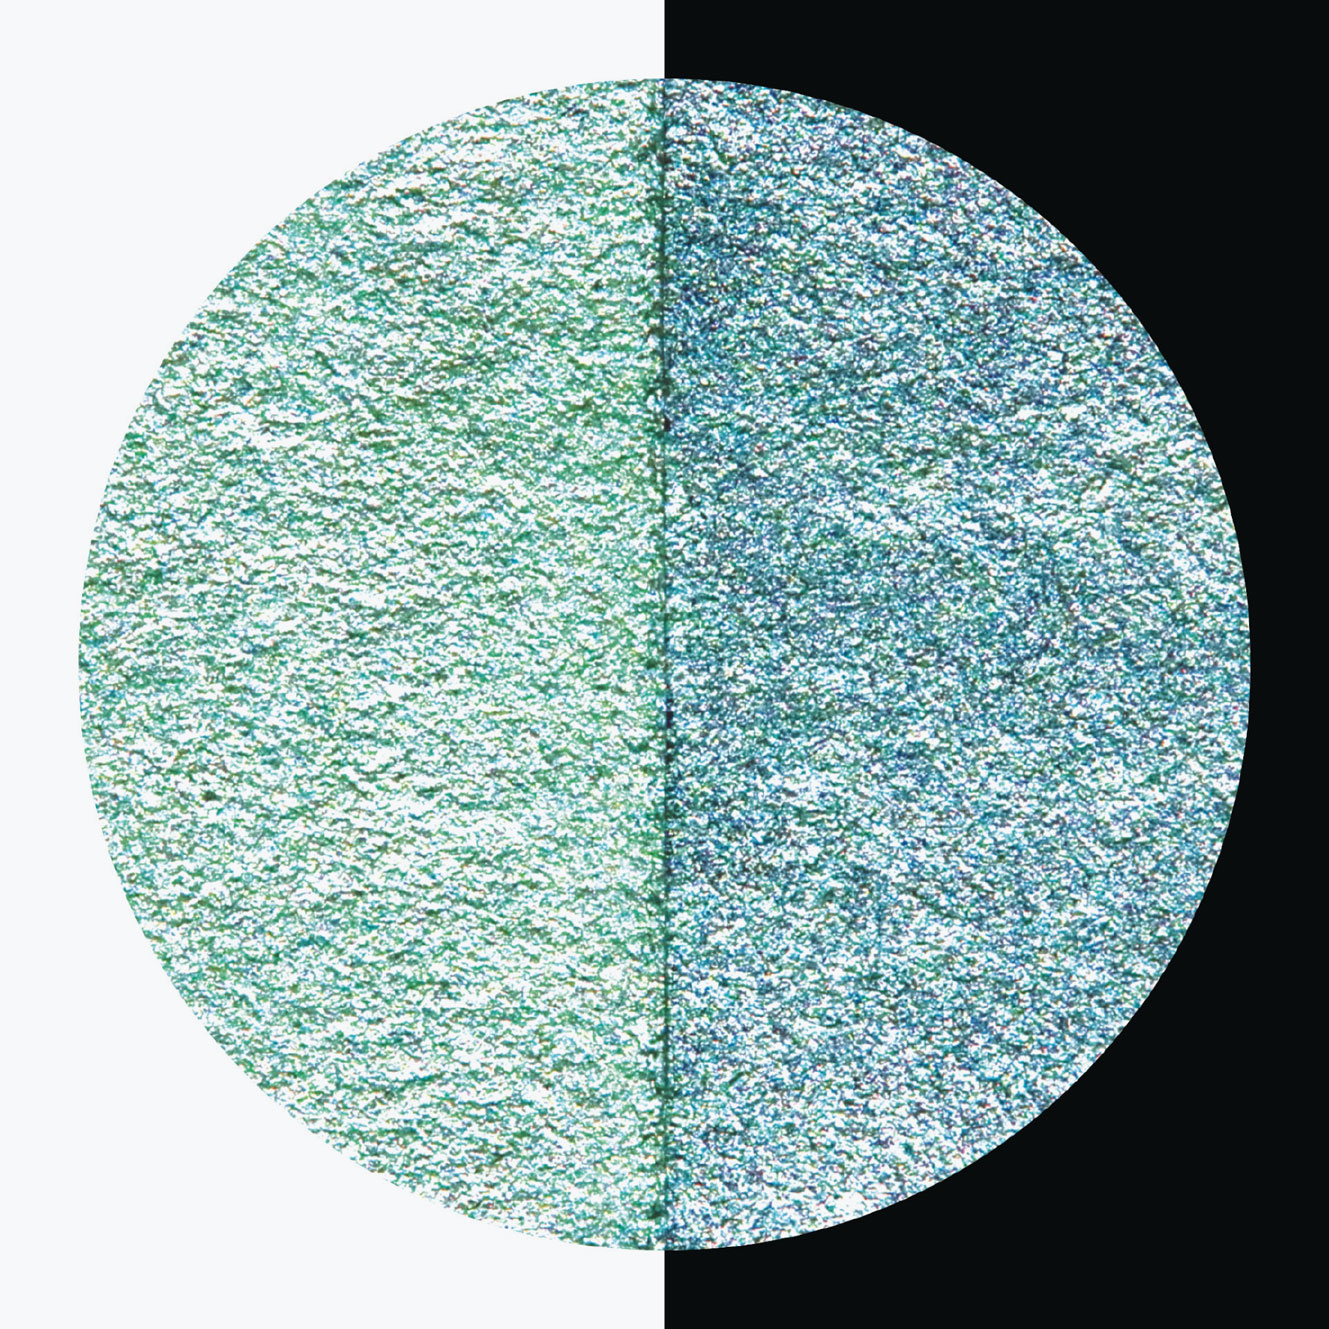 Finetec - Pearlcolor Mix - Seafoam